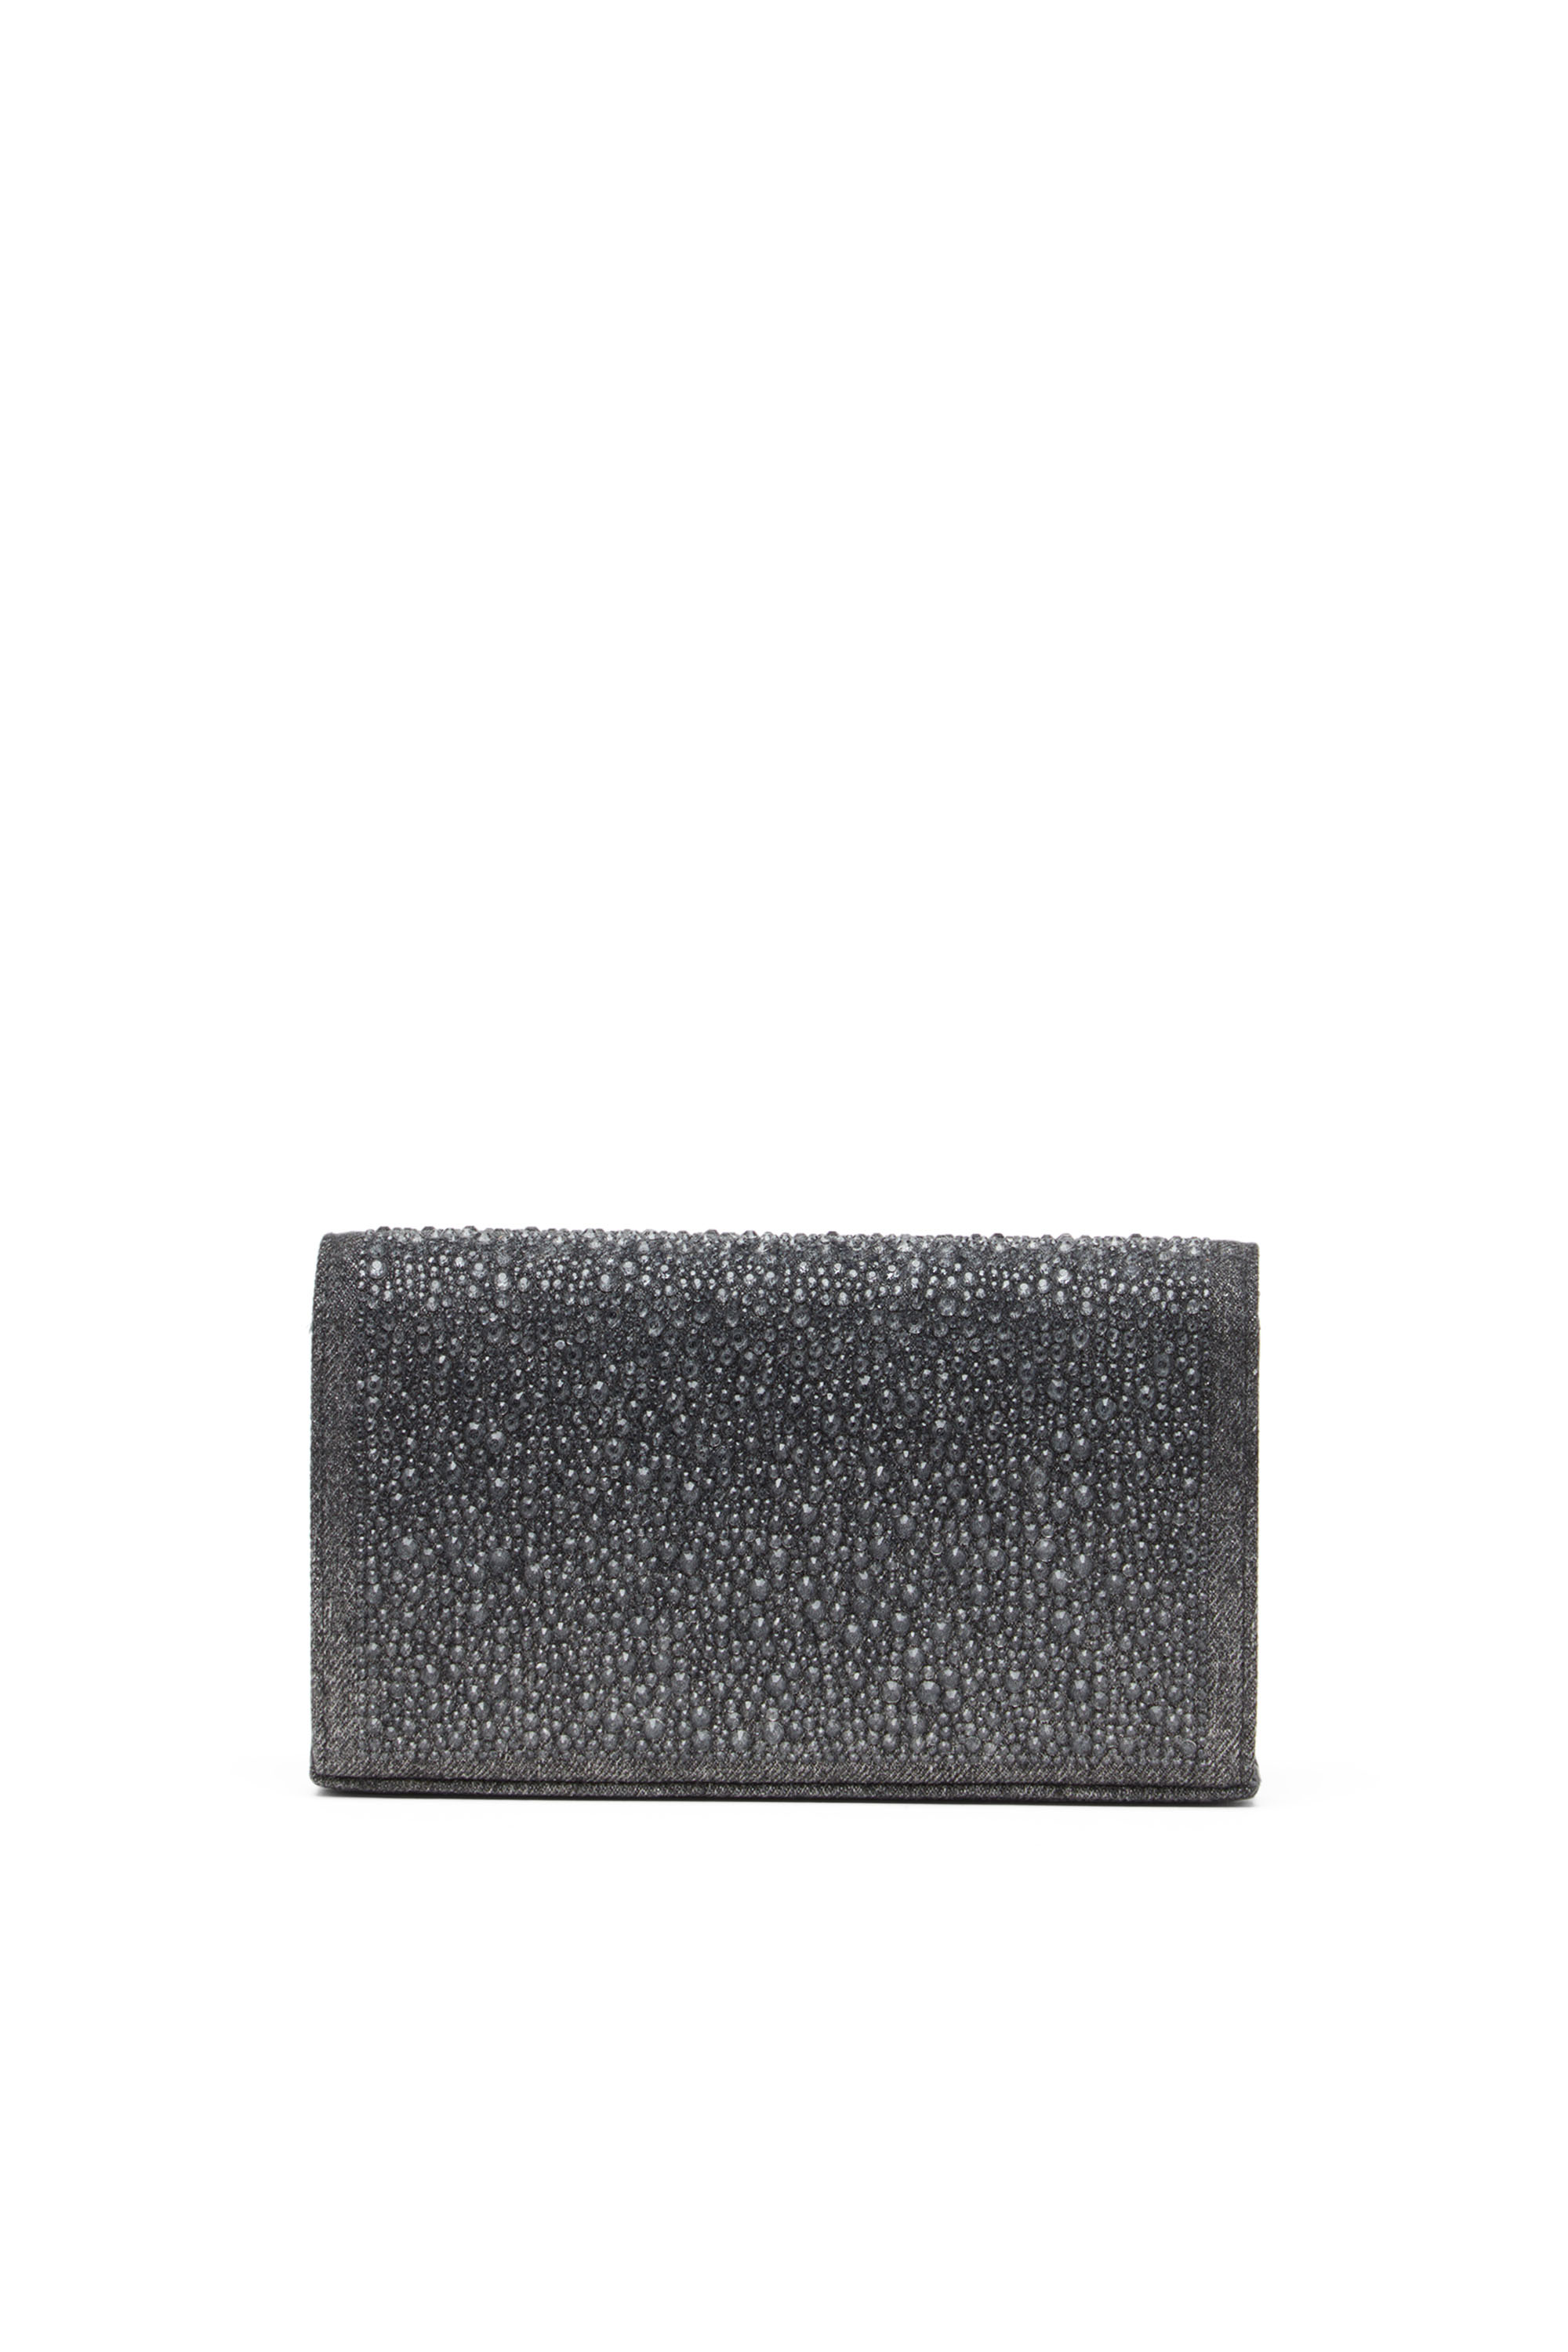 Diesel - 1DR WALLET STRAP, Woman Wallet purse in crystal denim in Black - Image 2